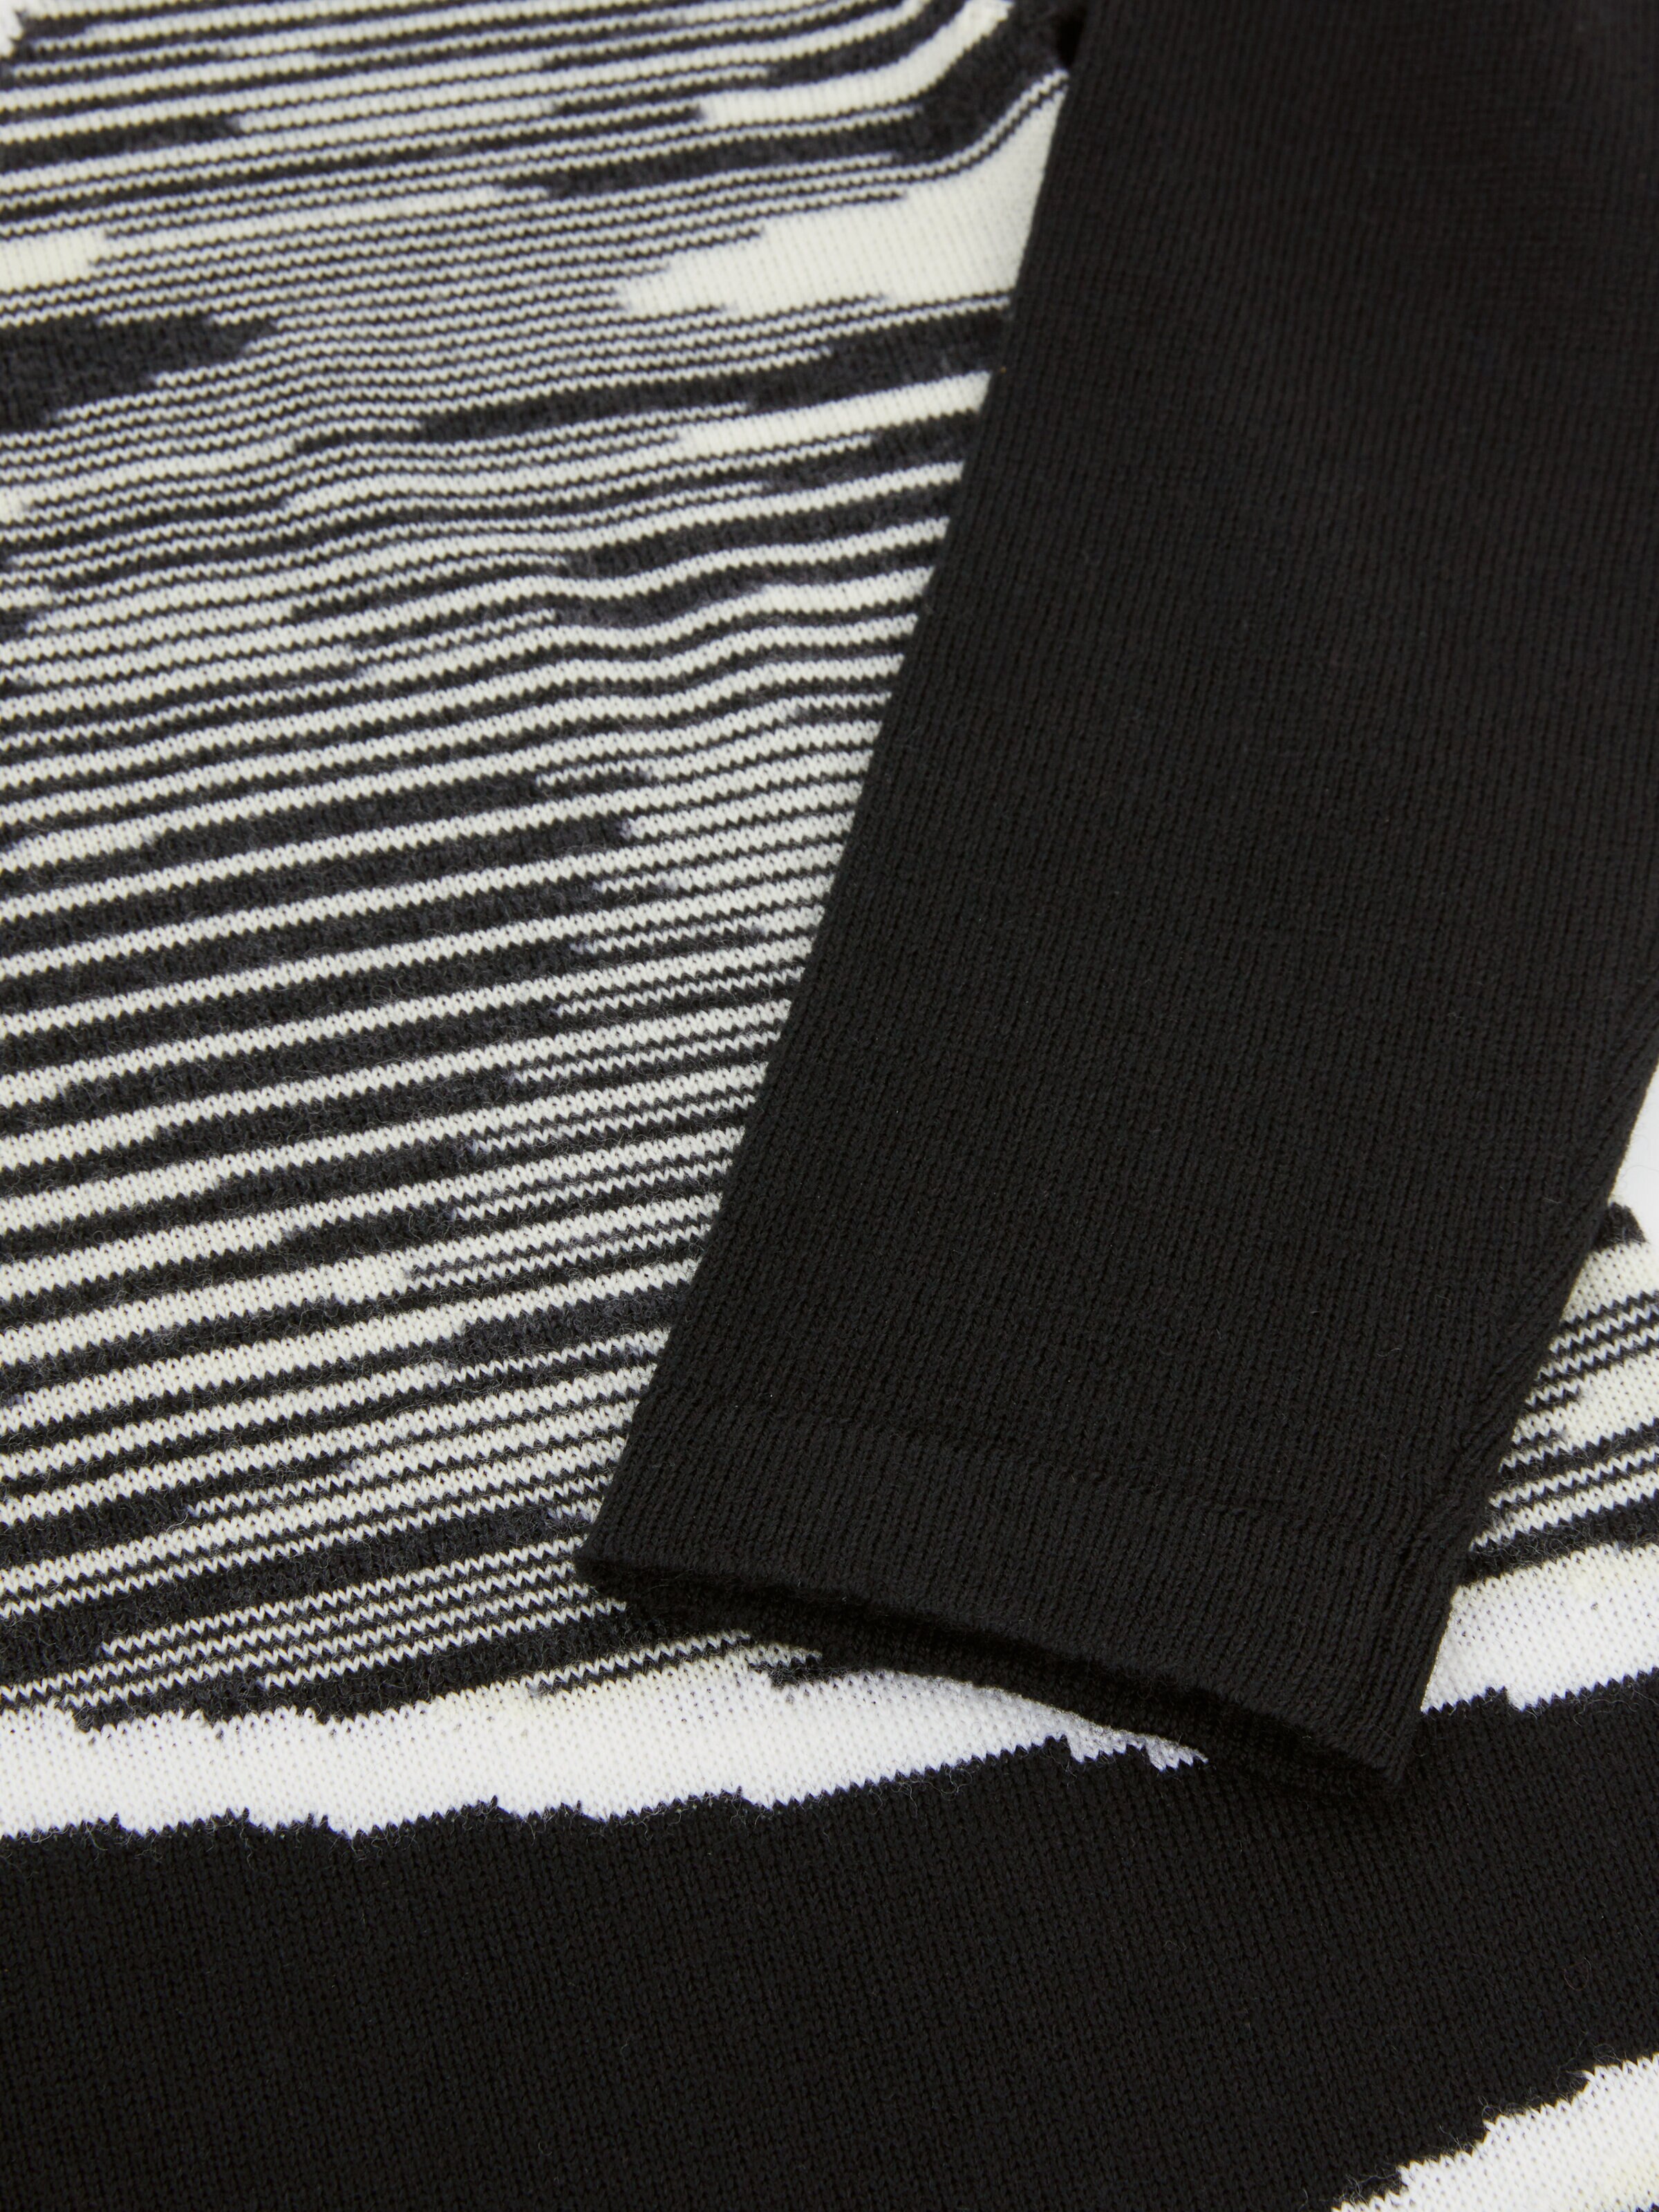 Pure virgin wool dress, Black & White - 3